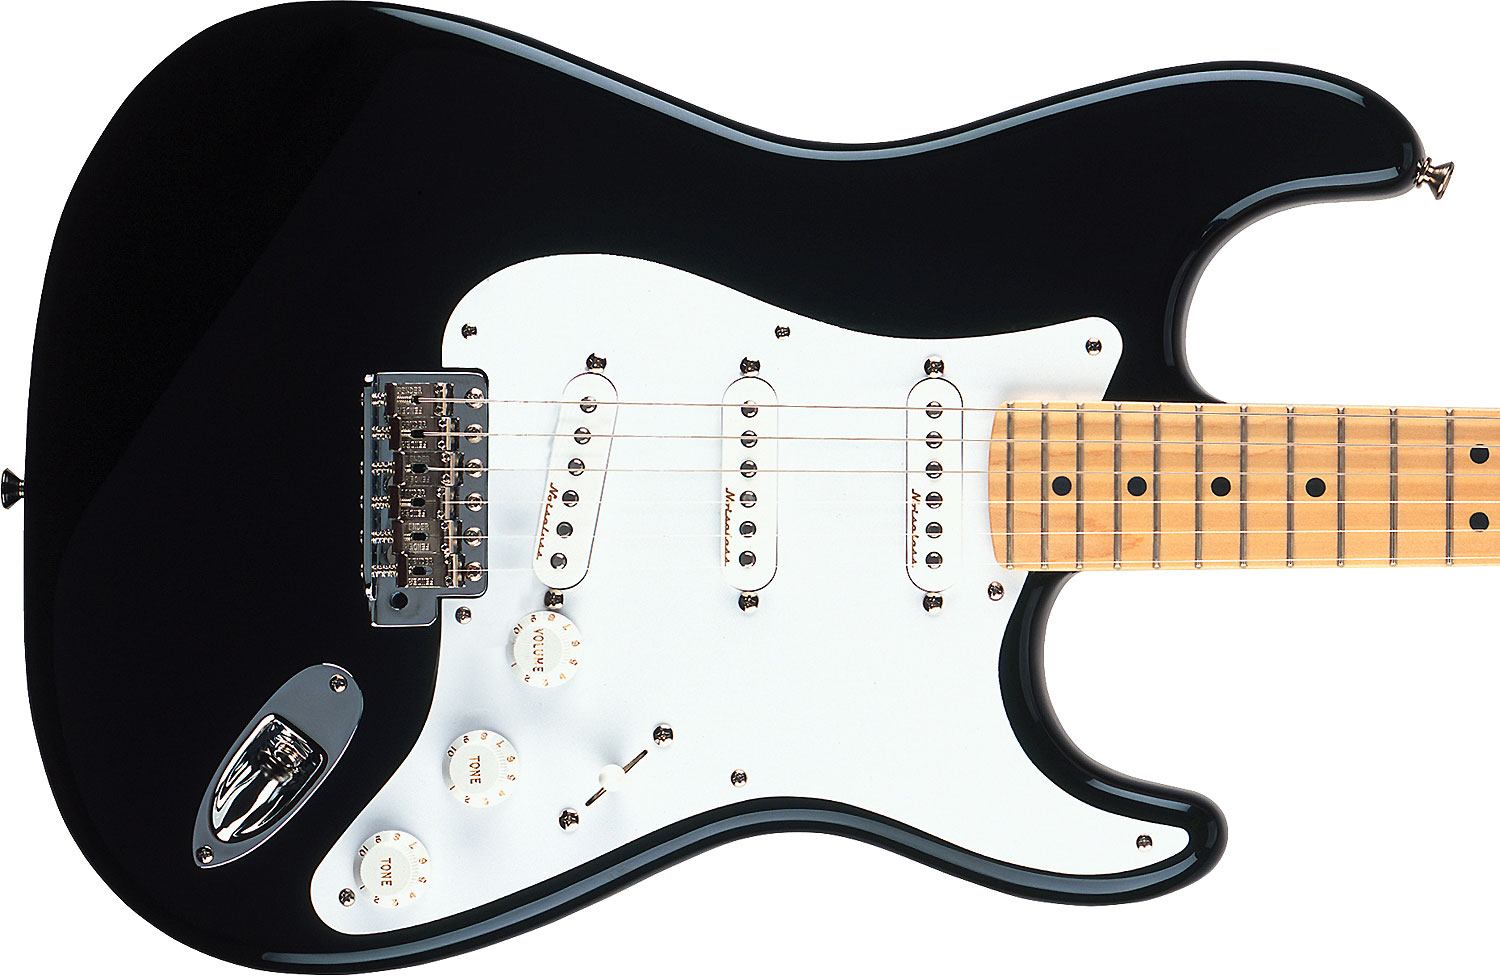 Fender Strat Eric Clapton Usa Signature 3s Trem Mn - Black - Str shape electric guitar - Variation 2